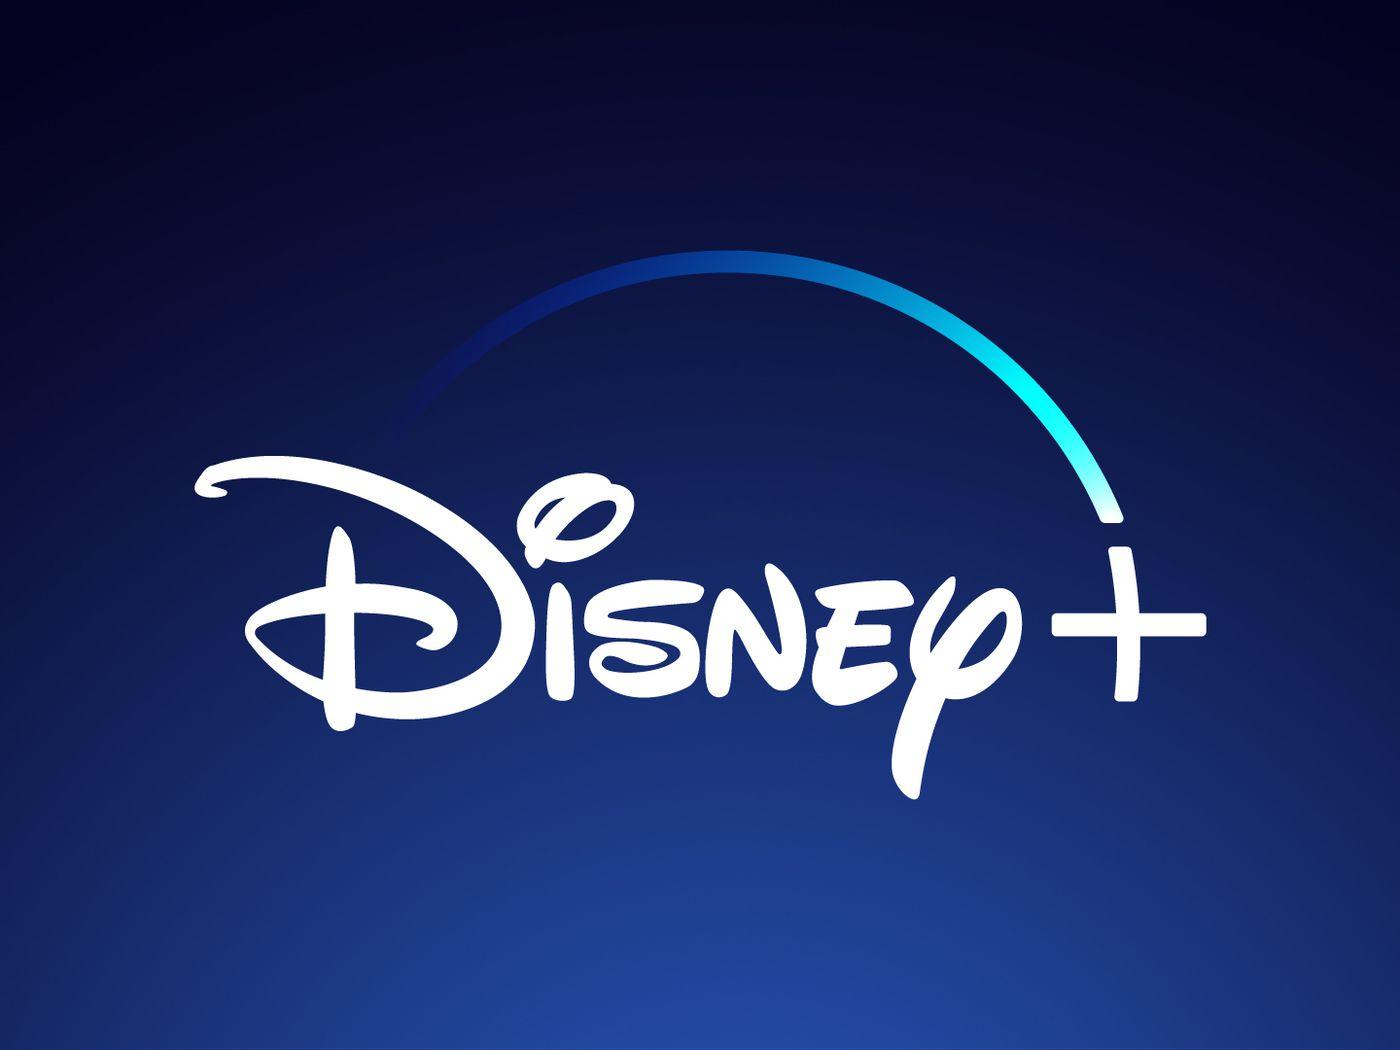 Disney Plus Wallpapers - Top Free Disney Plus Backgrounds - WallpaperAccess